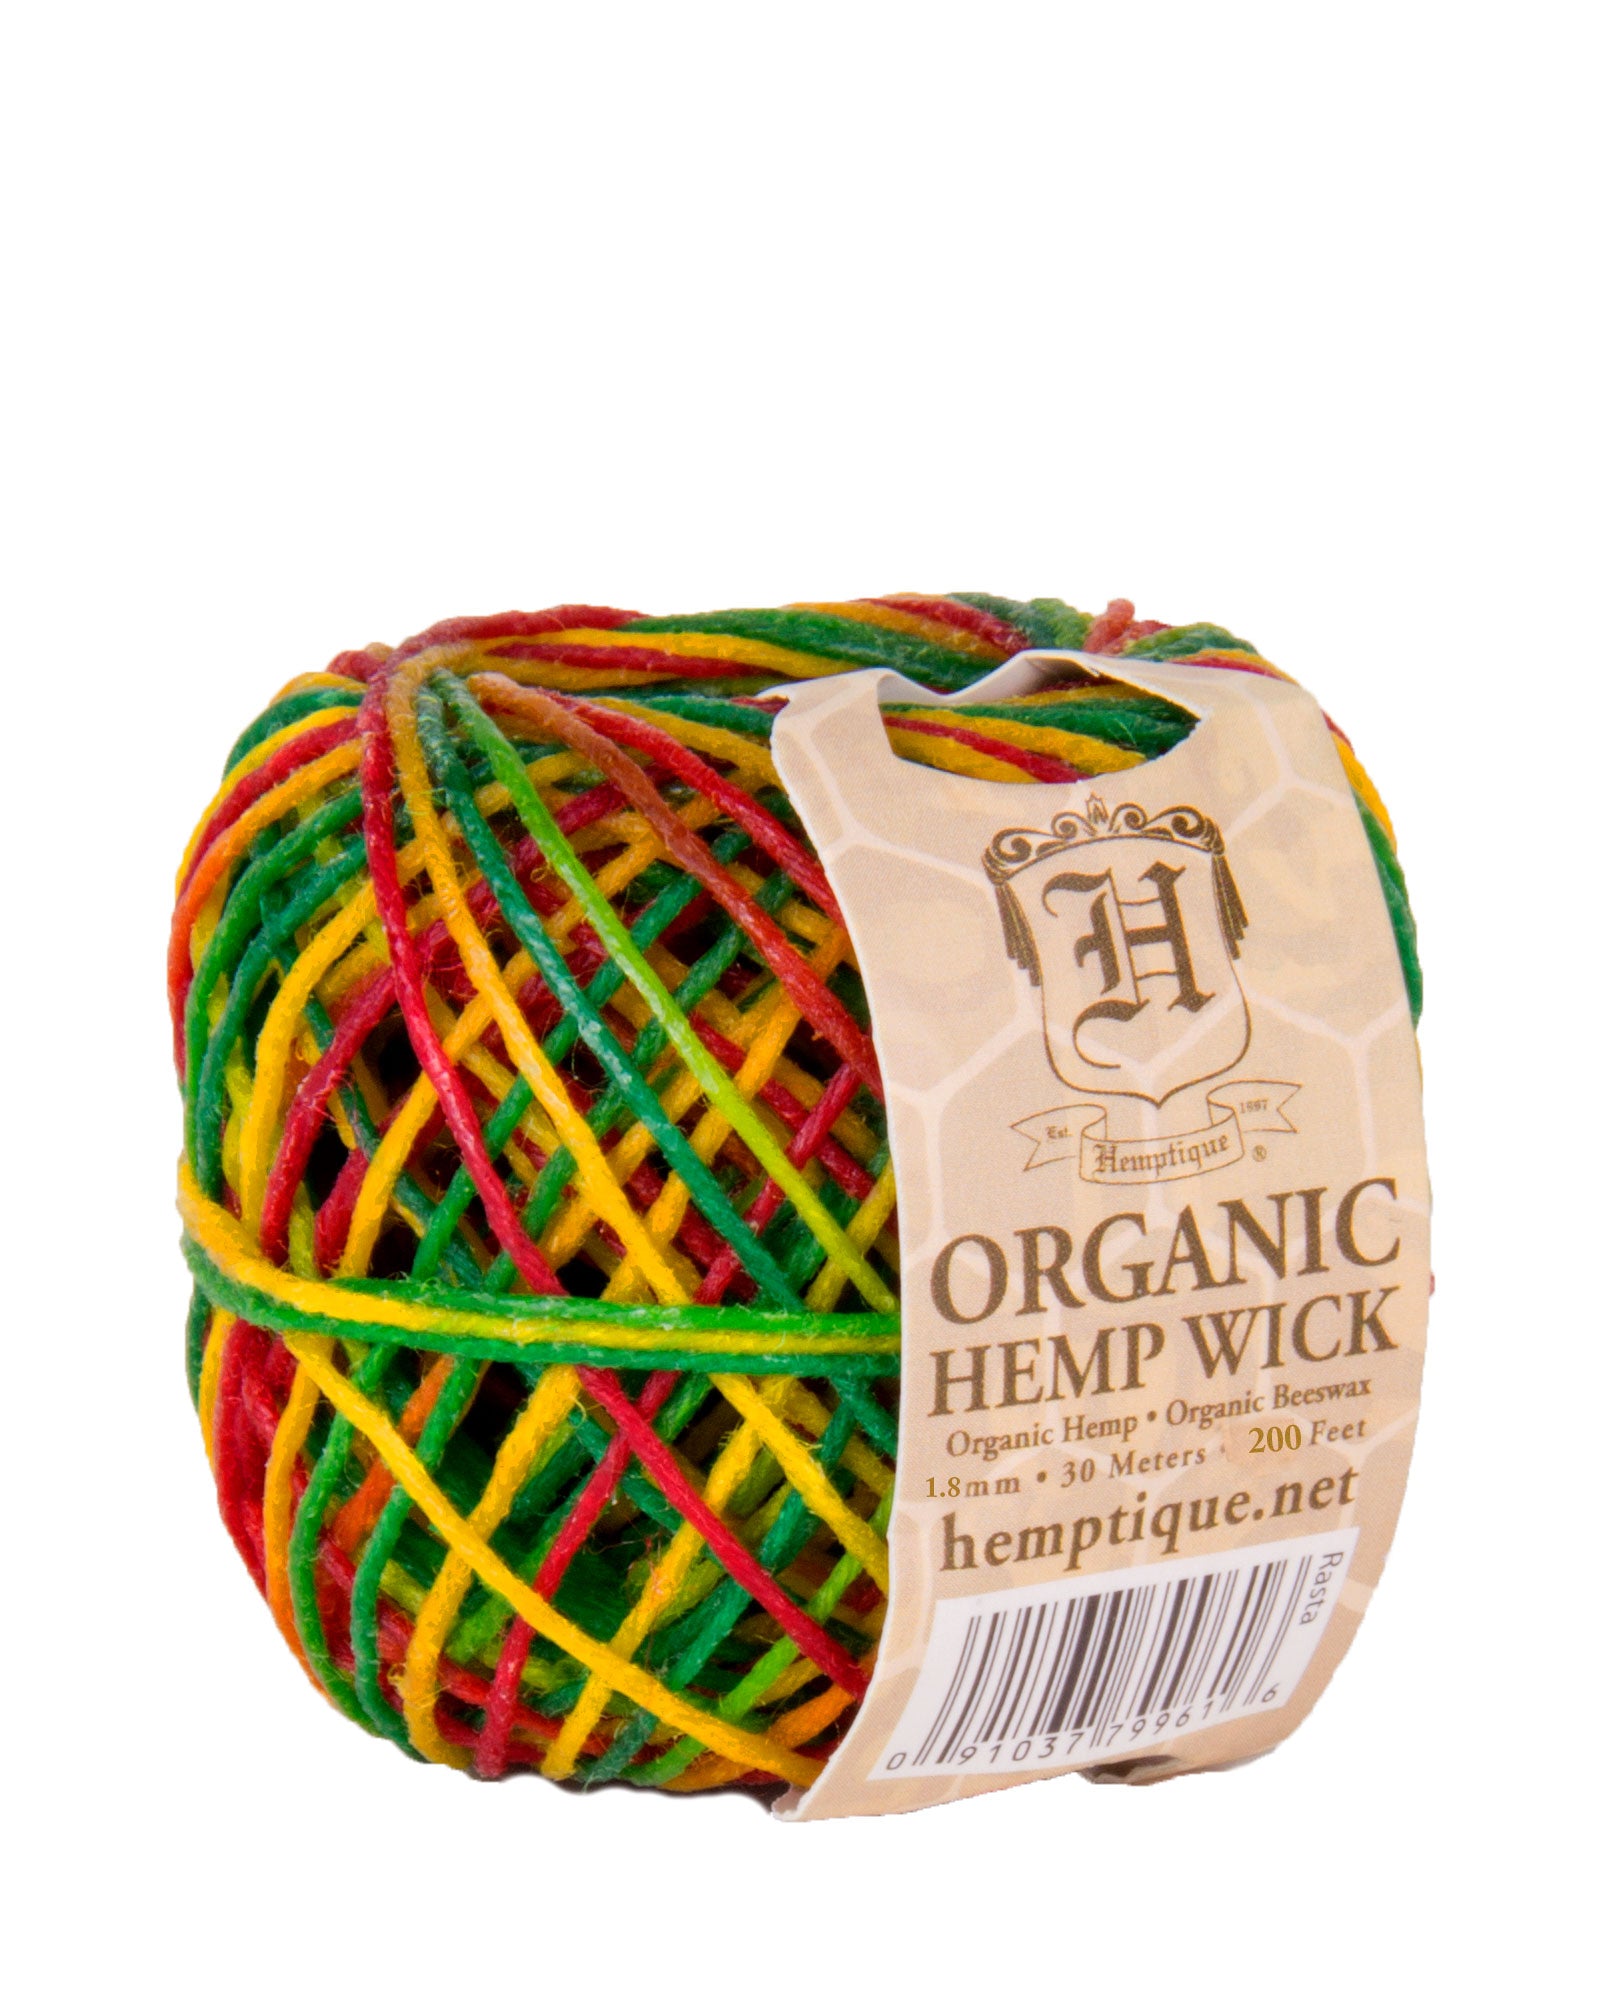 Hemptique Organic Beeswax Hemp Wick - 1.8mm Good Quality Candle Wicks